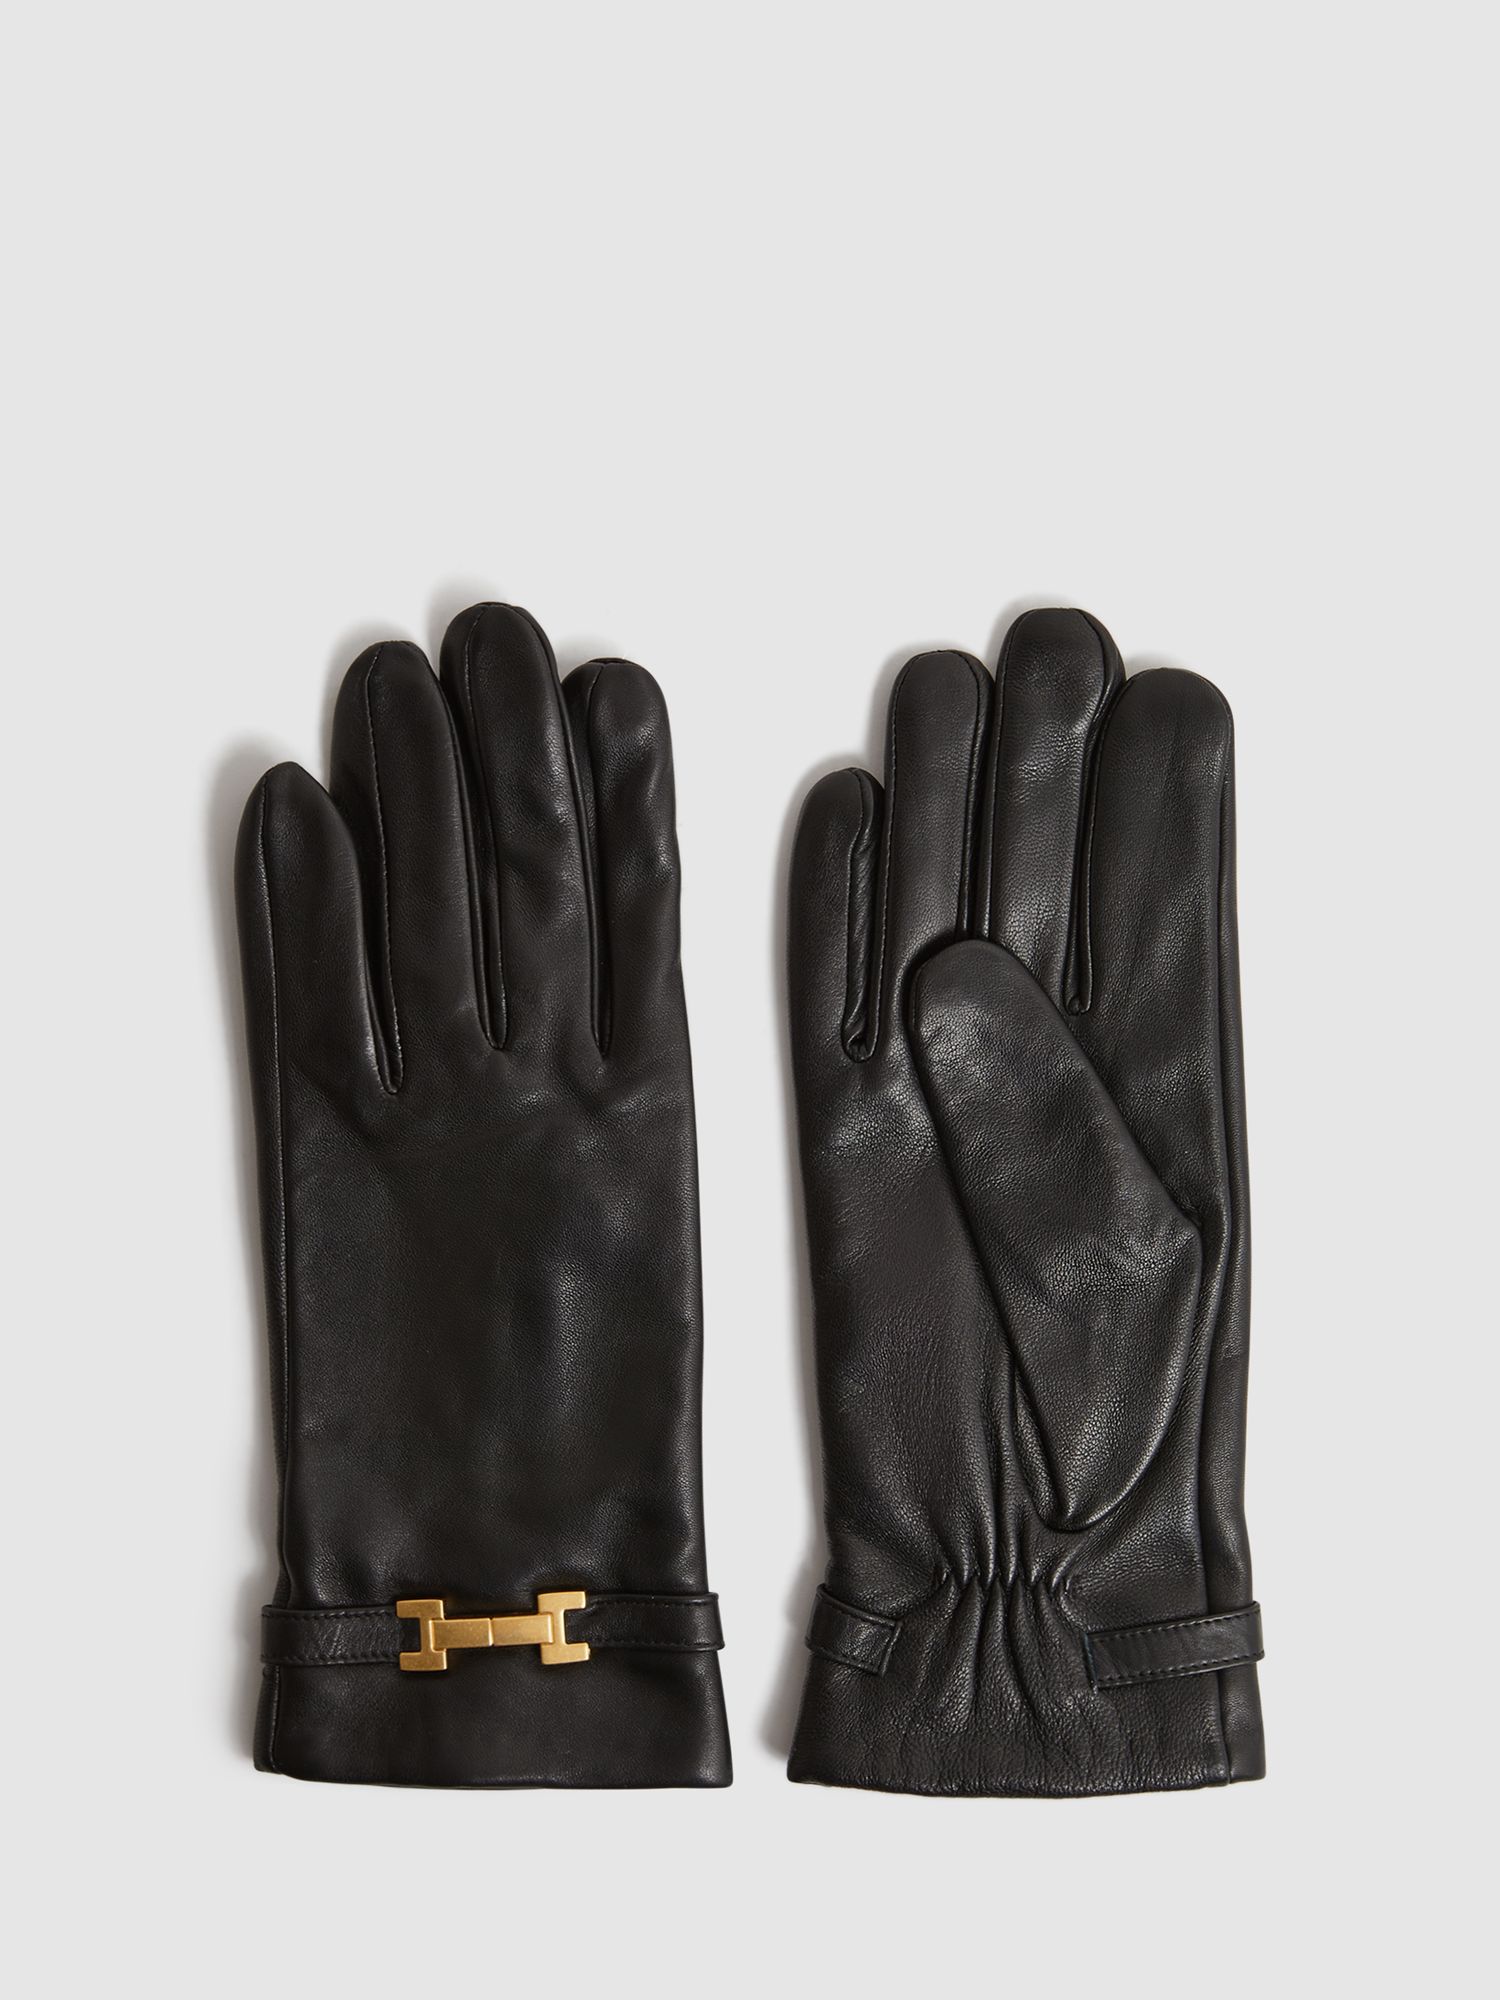 Reiss Harriet Leather Gloves, Black at John Lewis & Partners